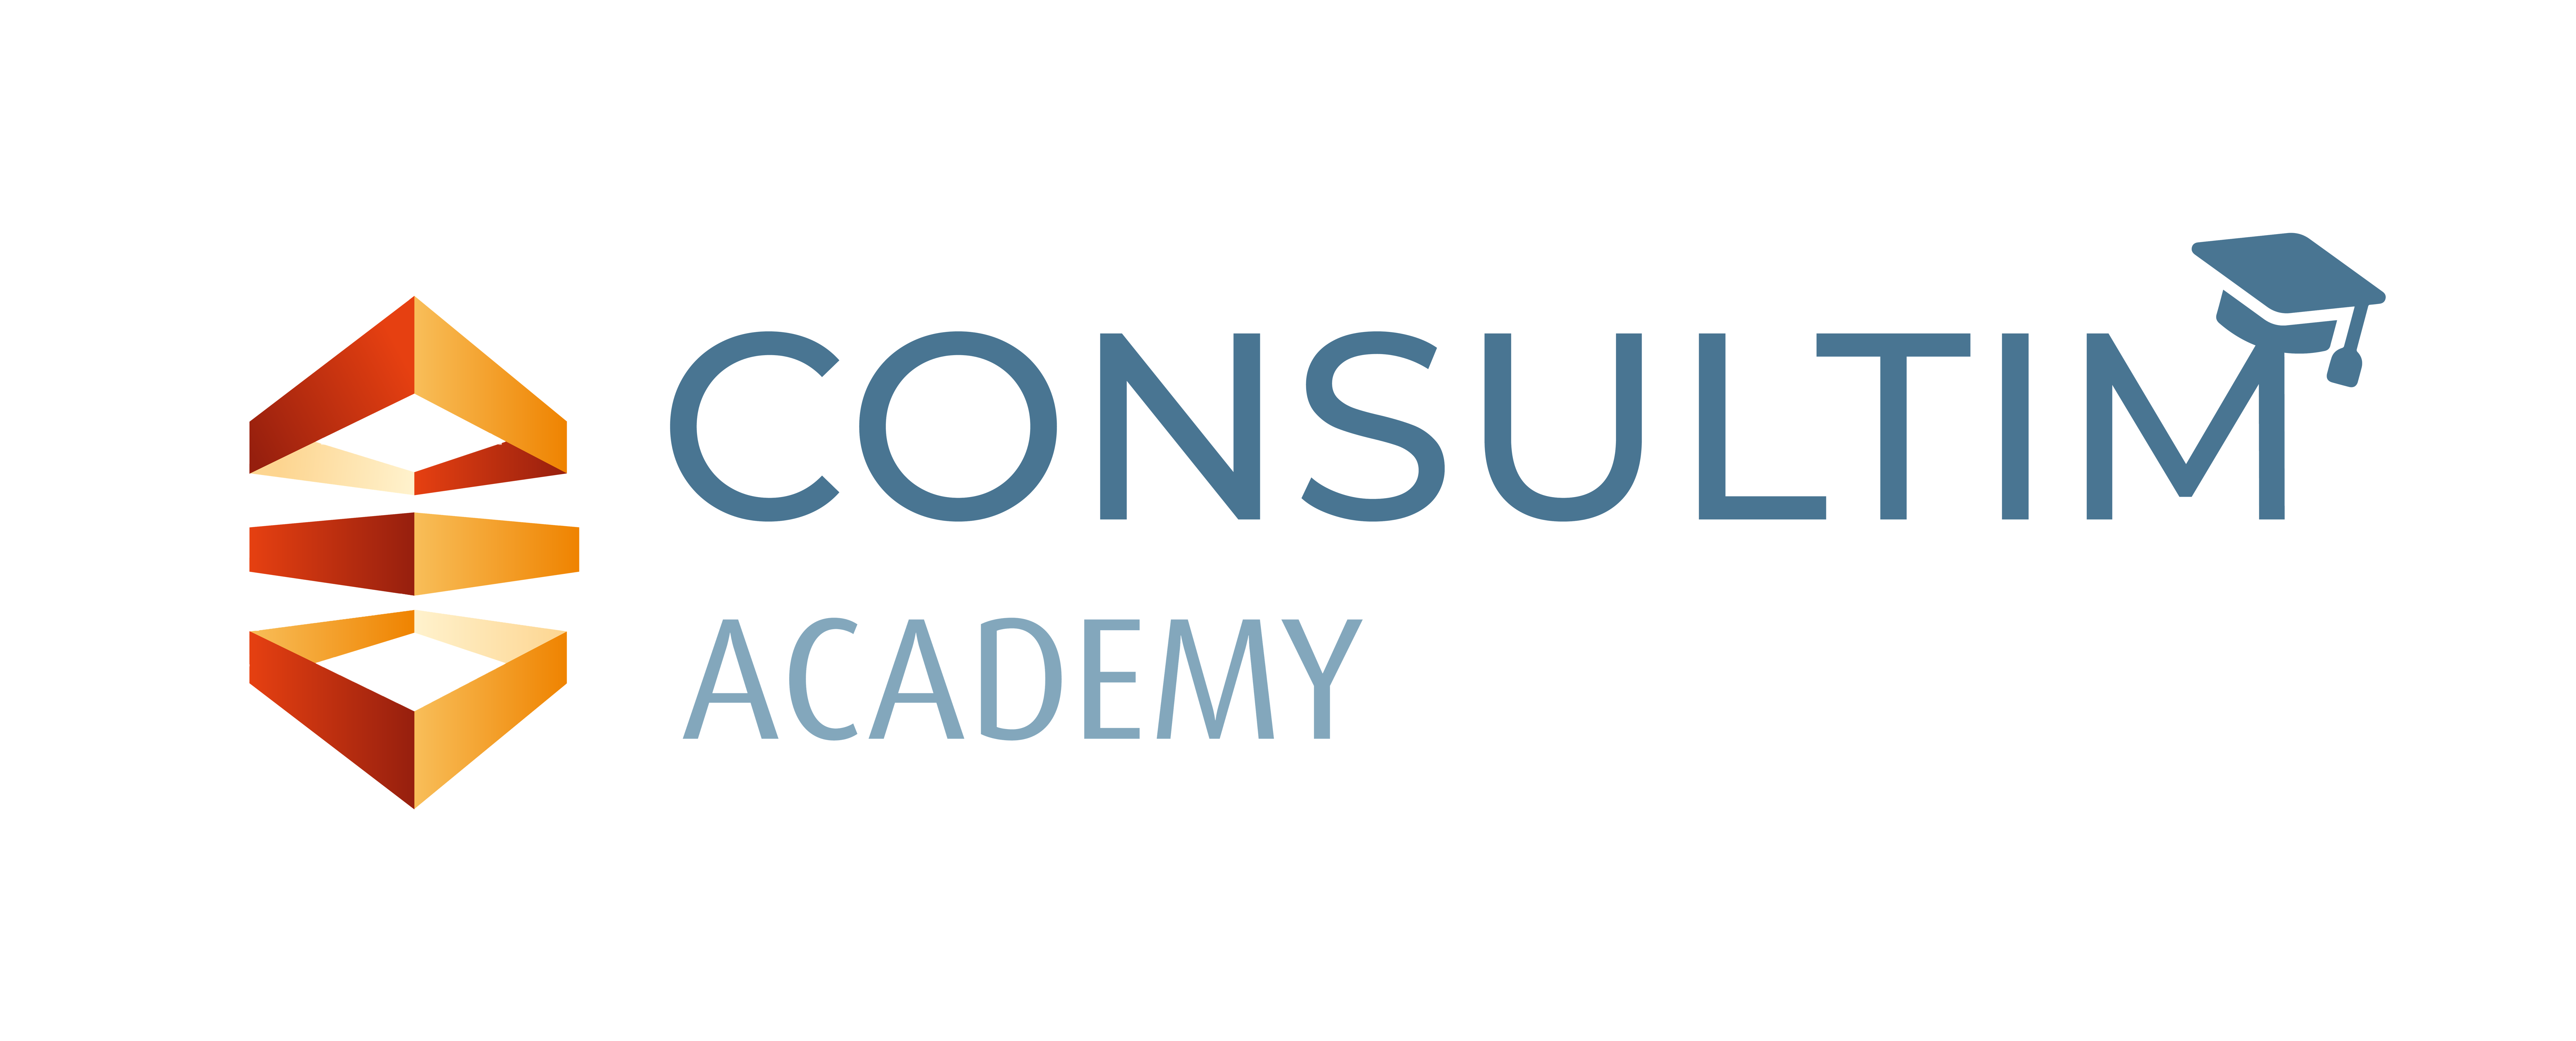 Consultim Academy